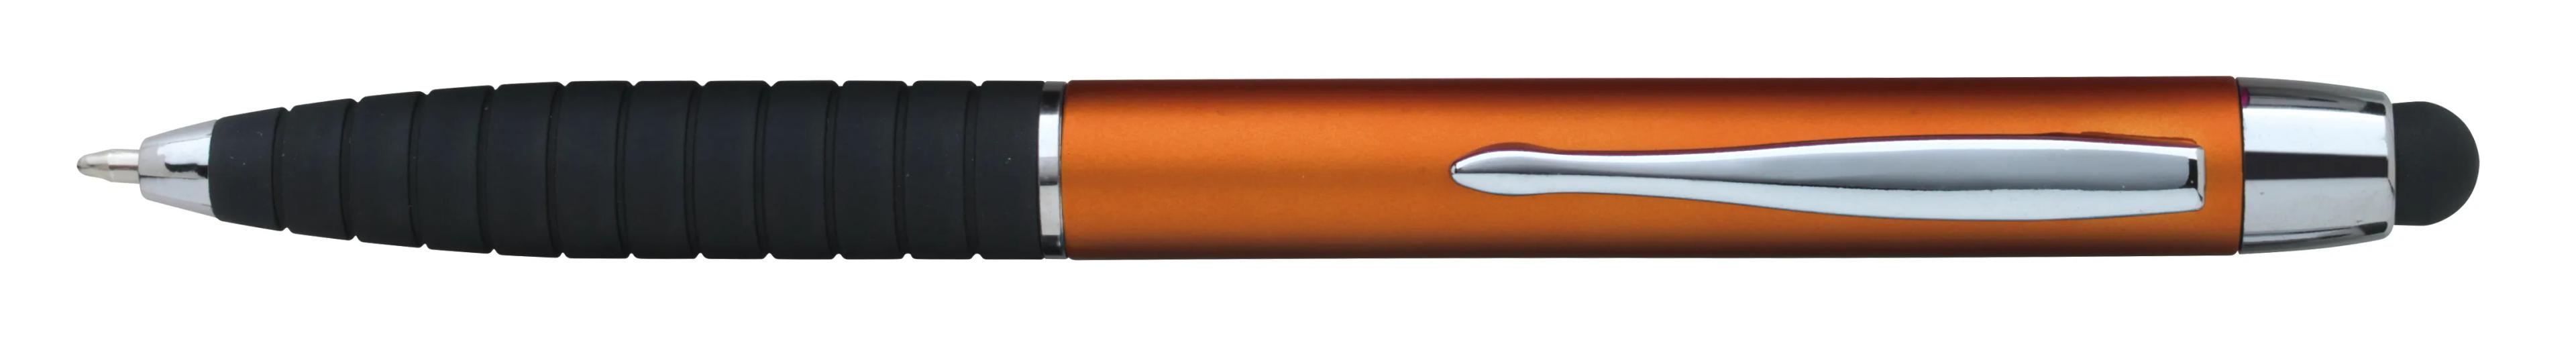 Metallic Cool Grip Stylus Pen 9 of 43